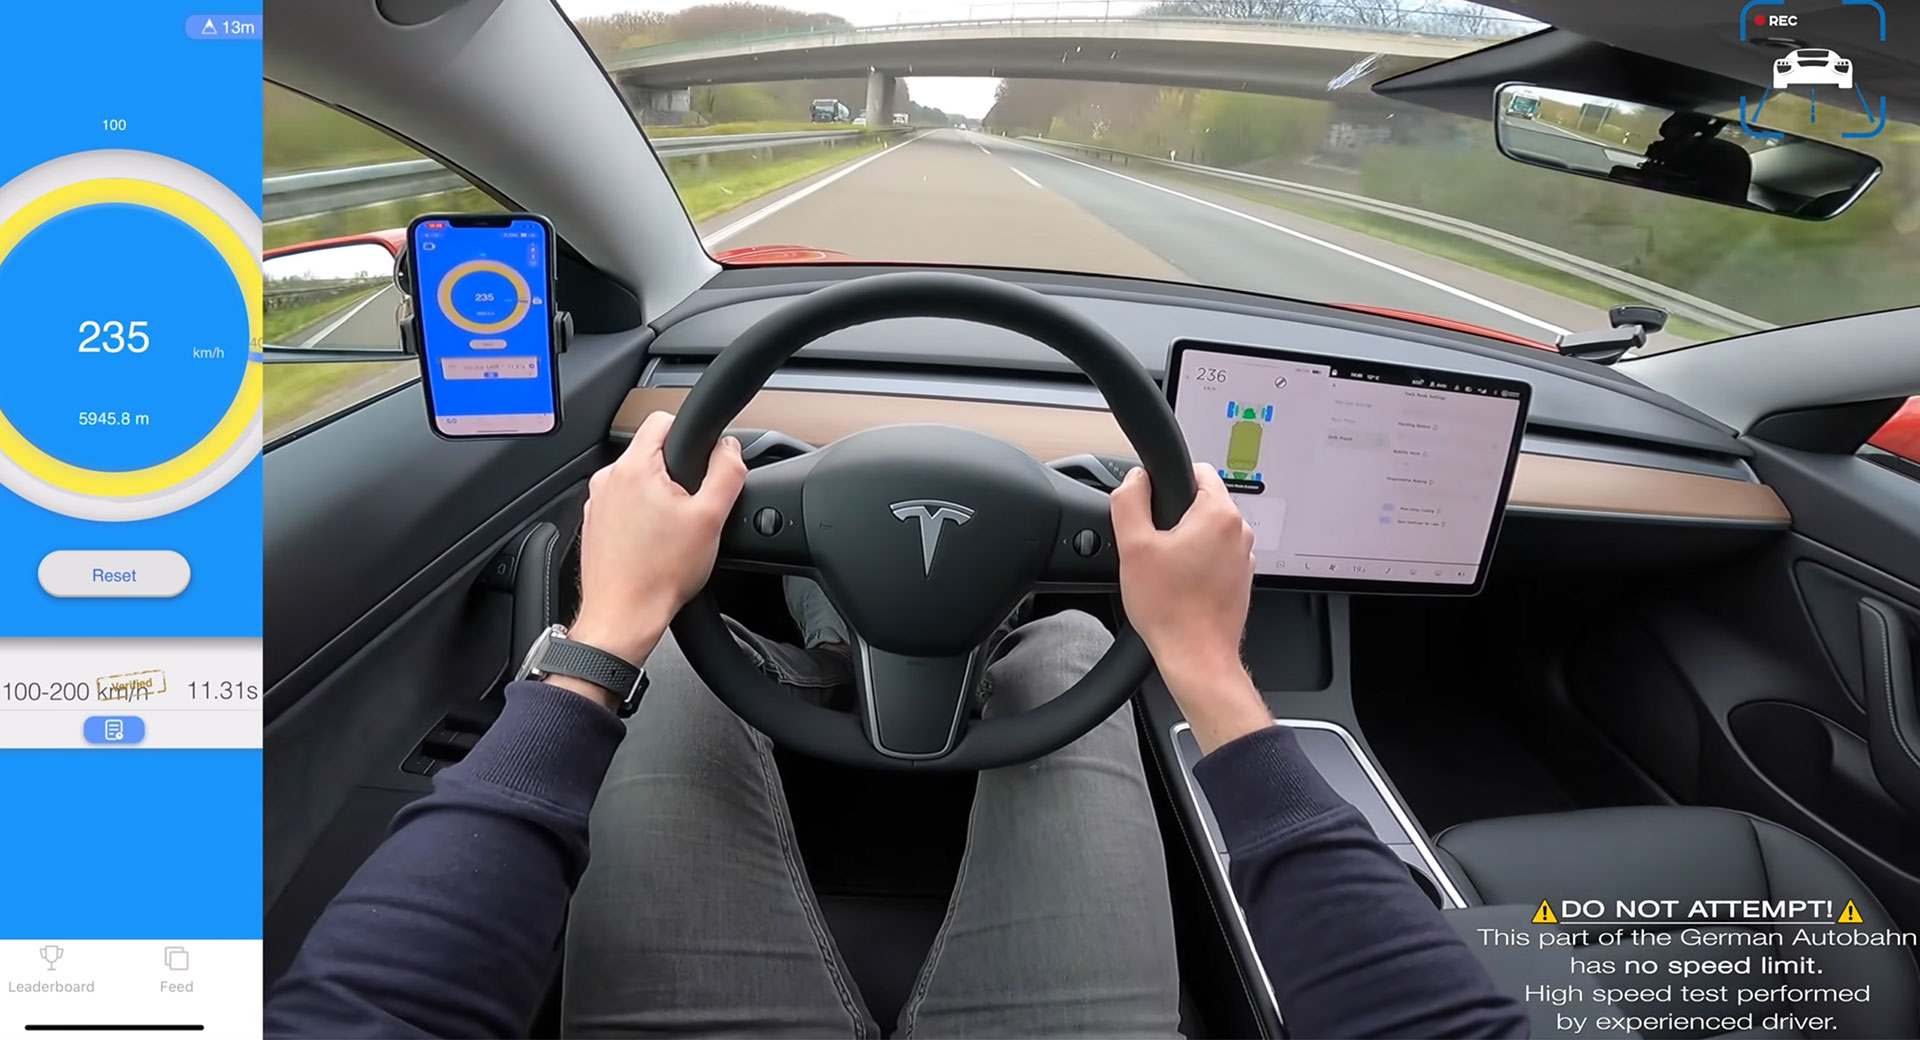 New 2021 Tesla Model 3 Driven - Now Even Better